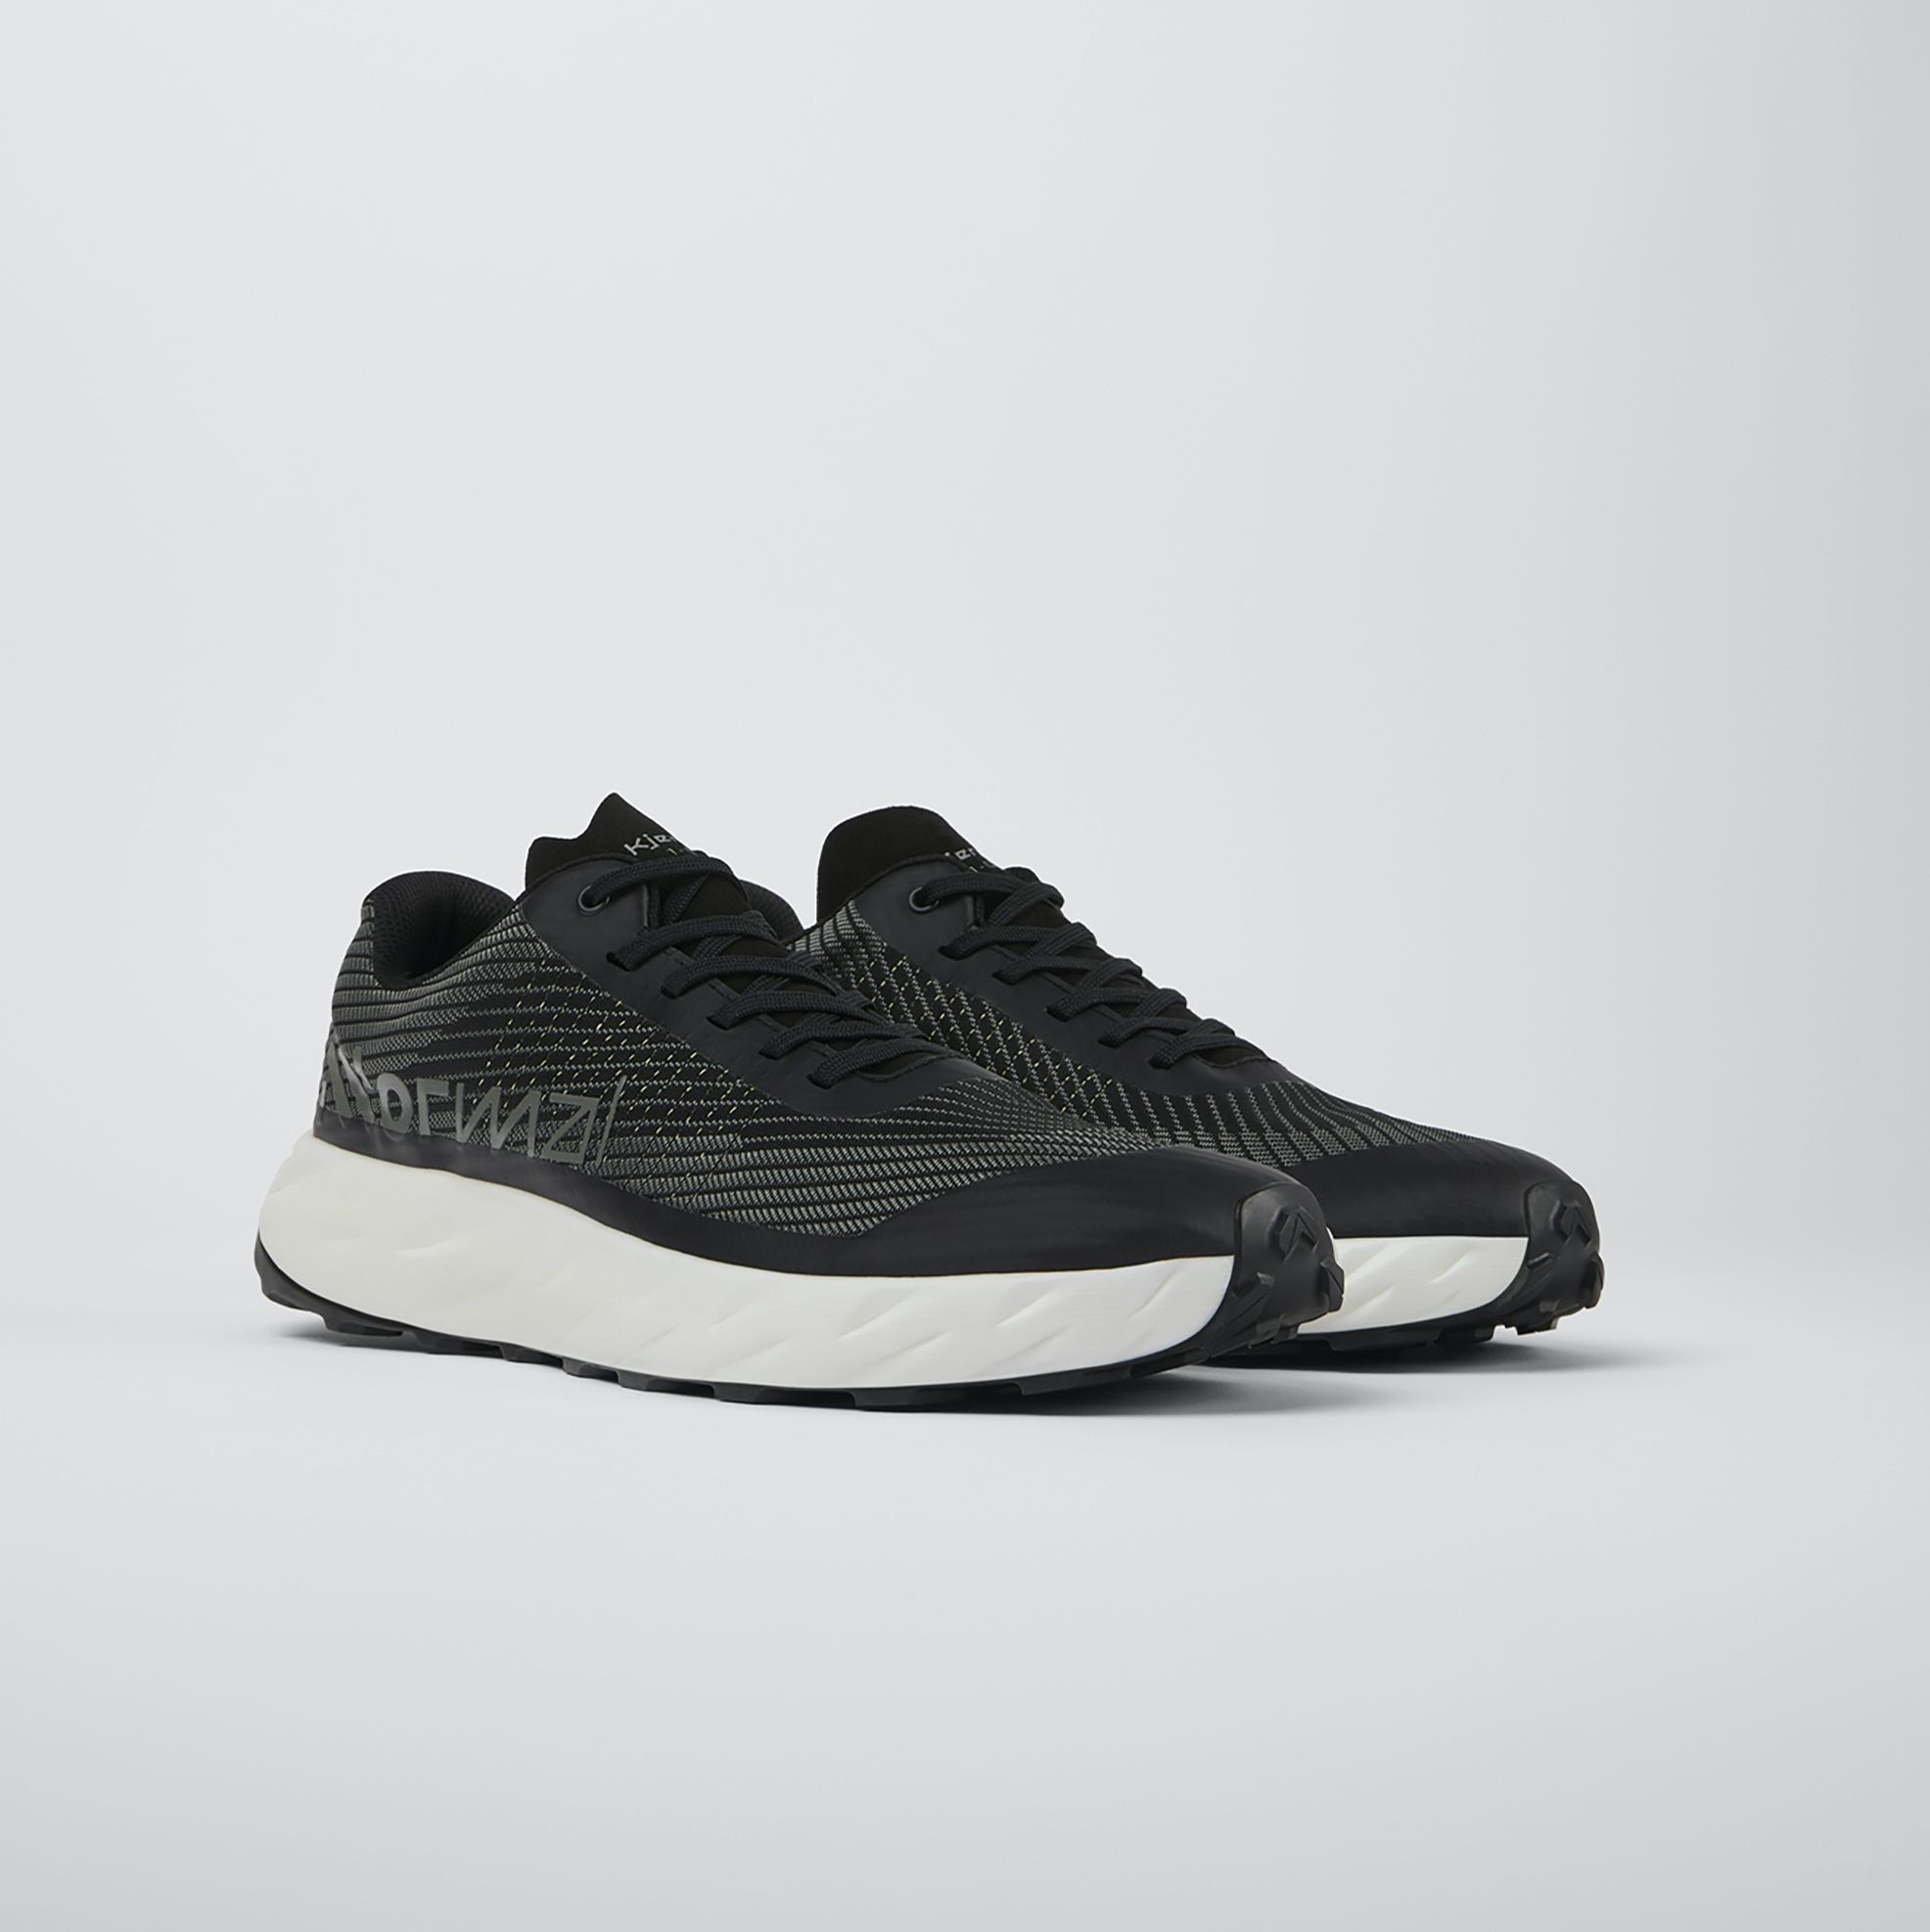 Chaussure de Trail Kjerag Black / Grey